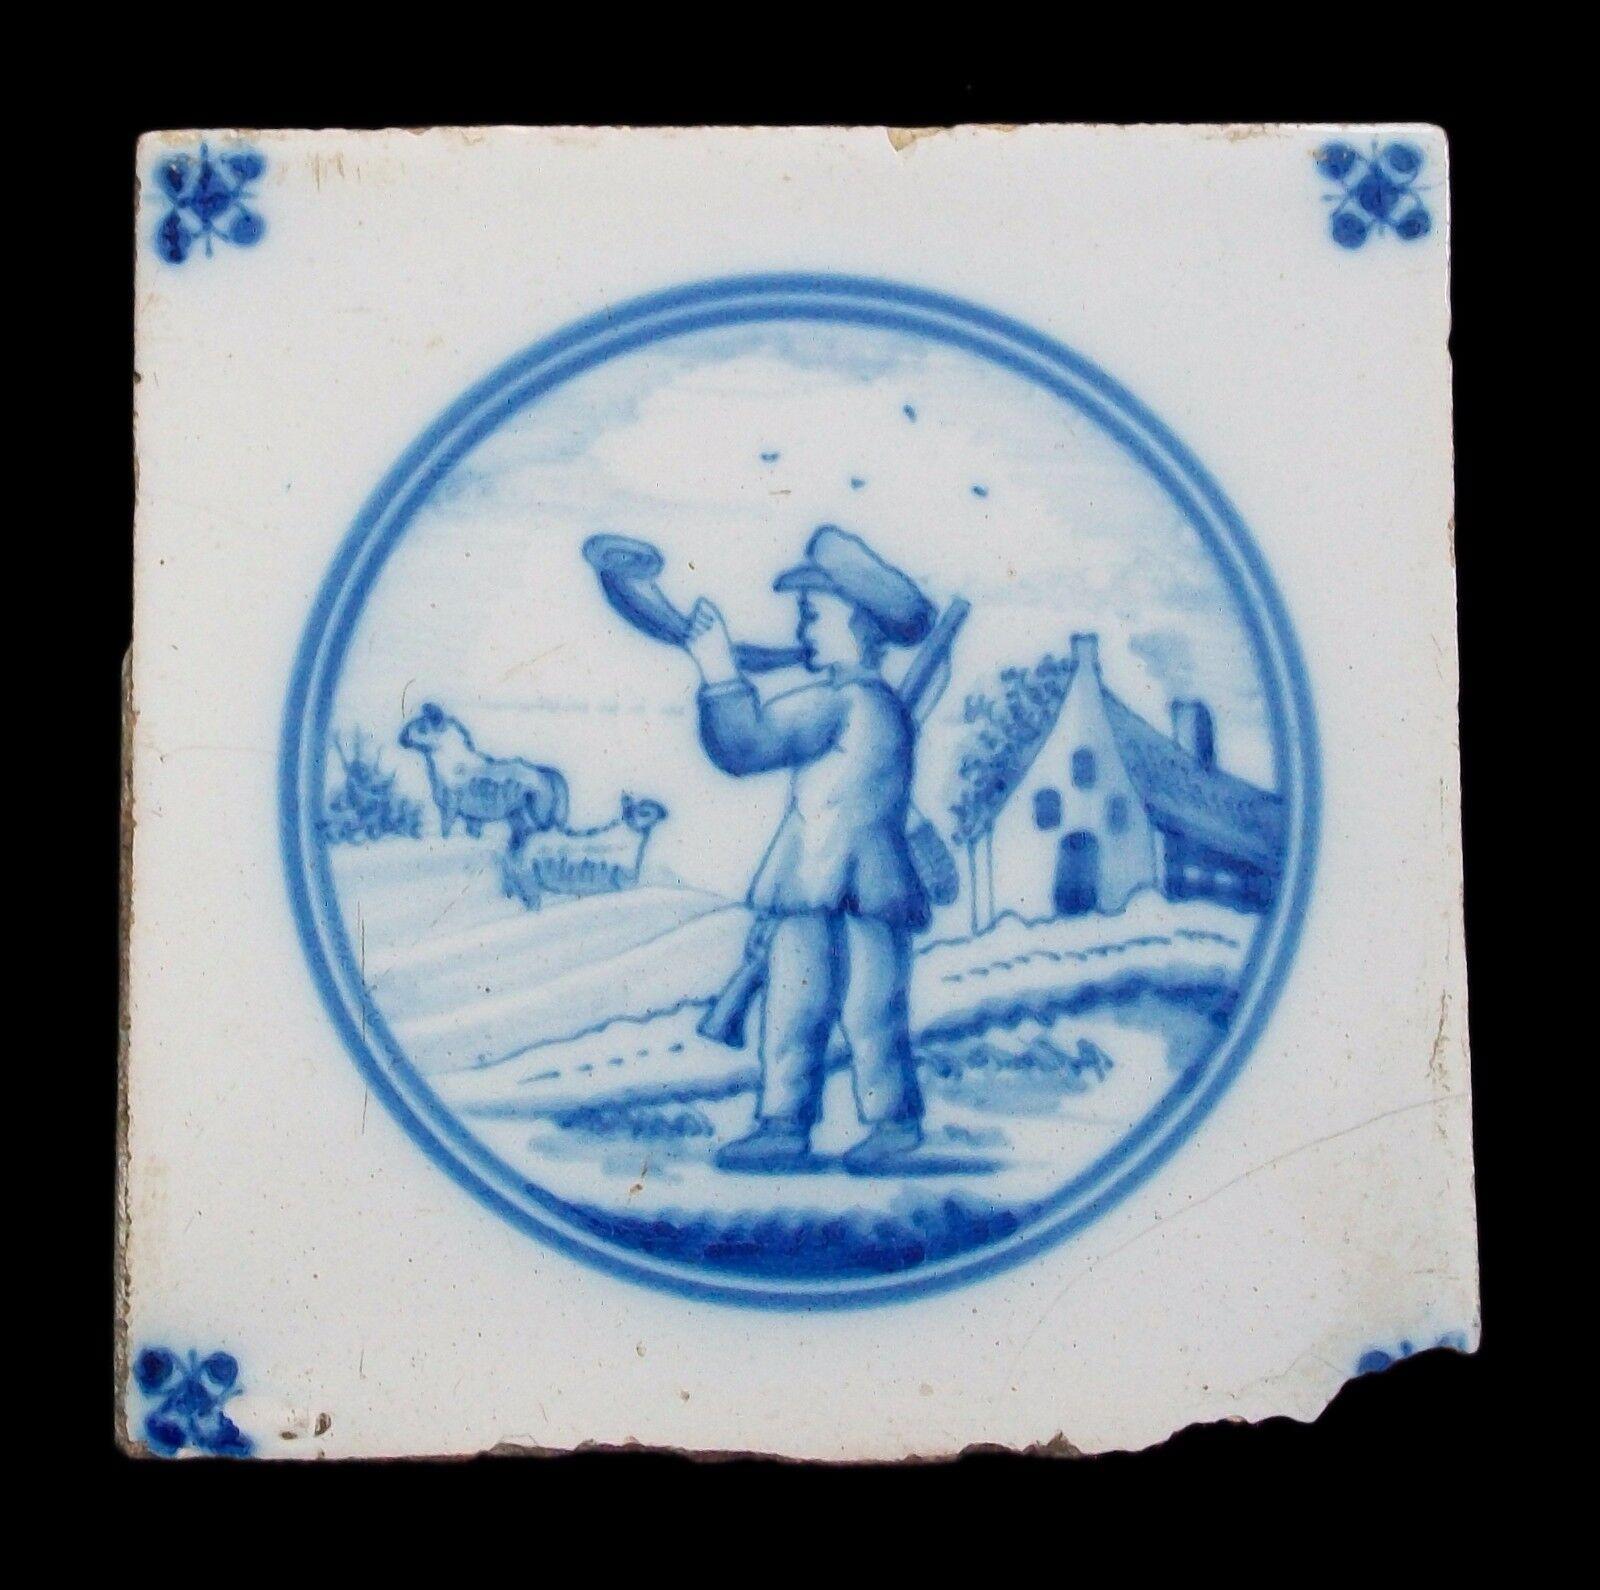 Dutch Colonial Antique Dutch Delft Tile, Hand Painted Shepherd/Sheep, Holland, 18th Century